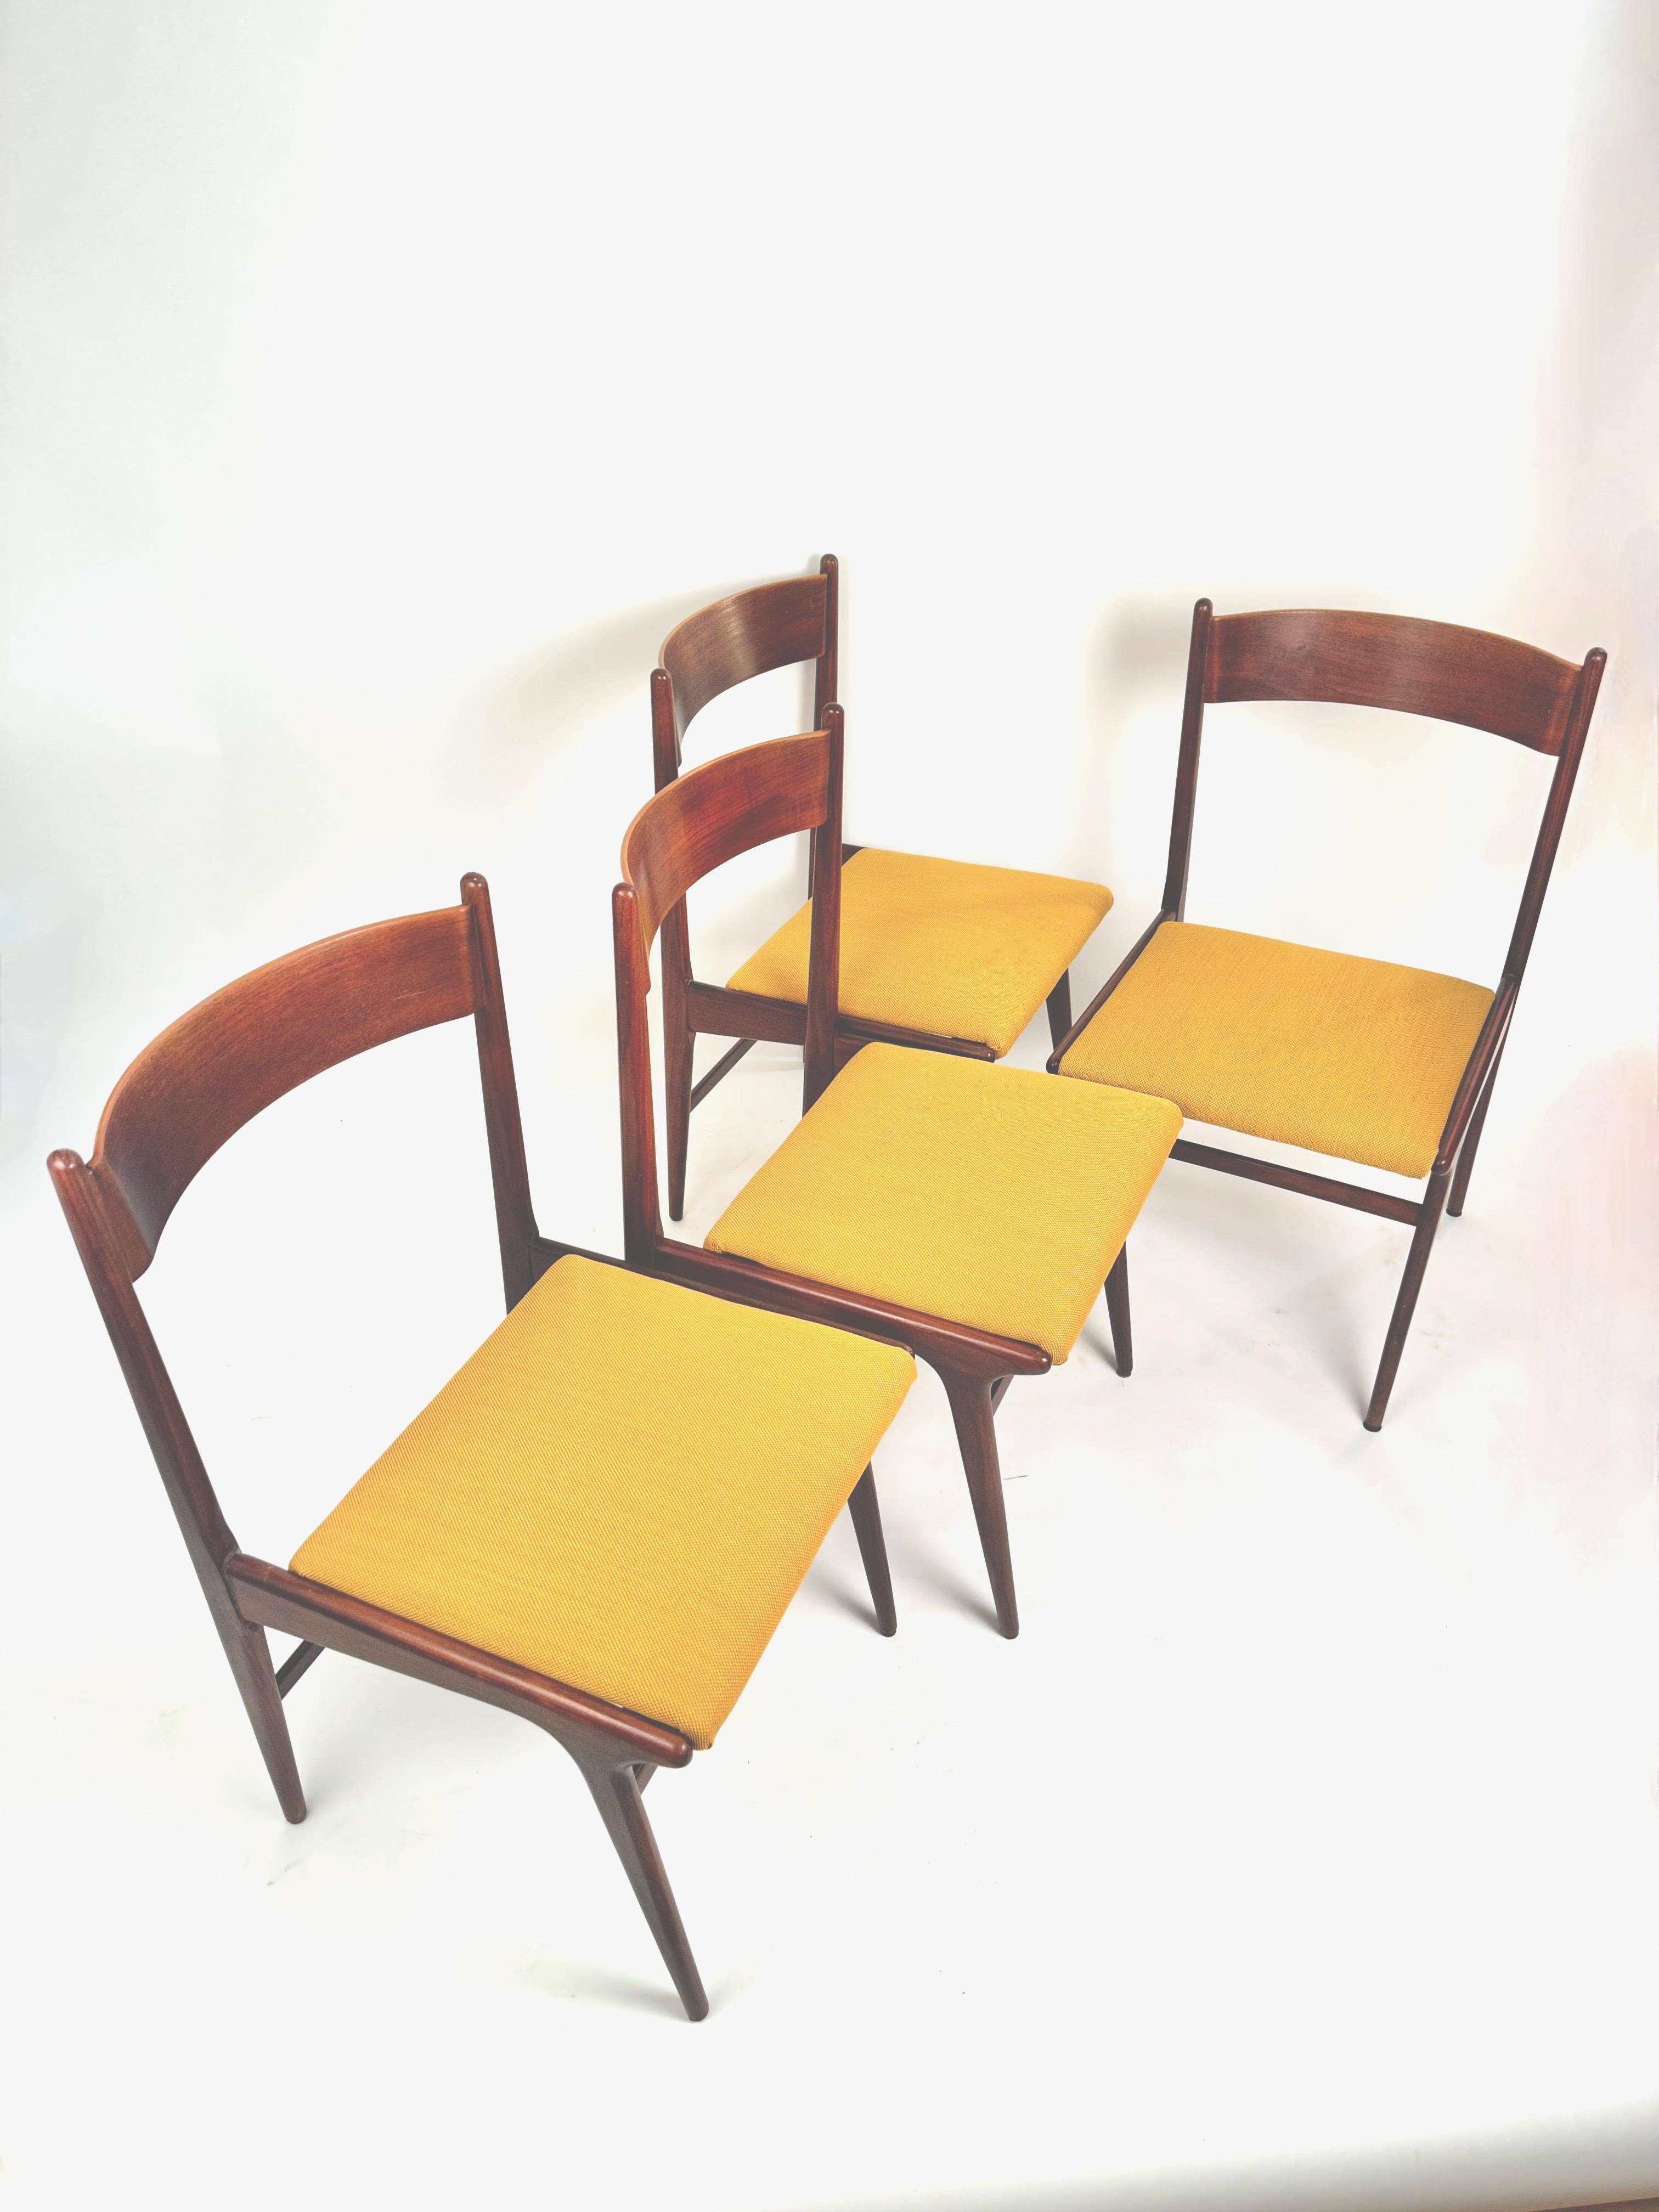 Carlo de Carli MidSet of Four Teak Dining Chairs in Kvadrat Yello Fabric, 1960s For Sale 6